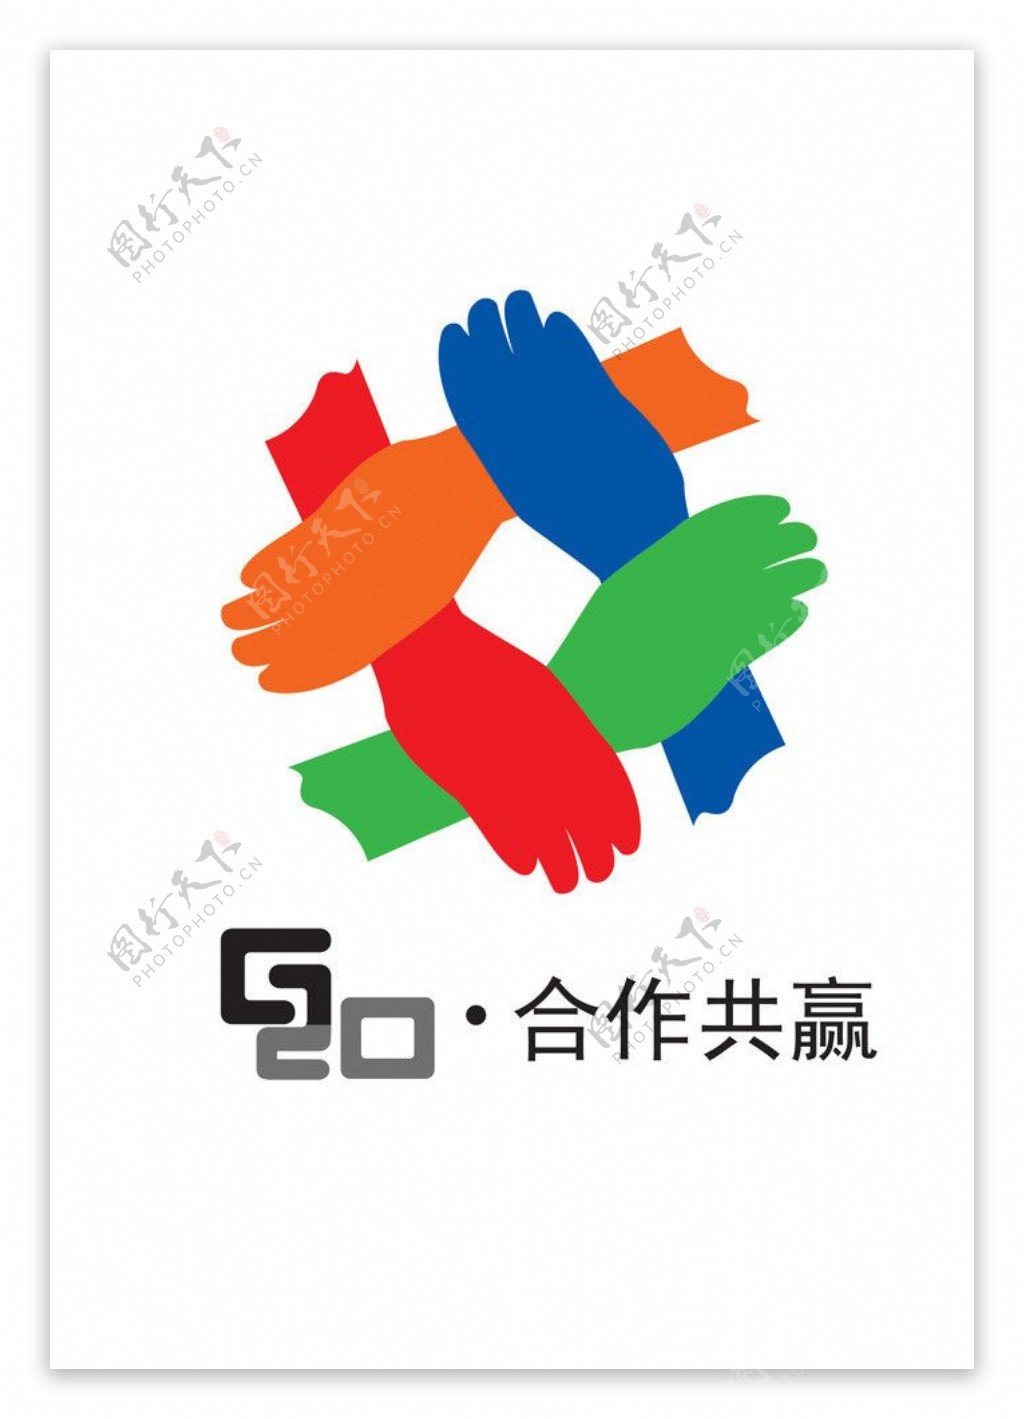 G20会议标志